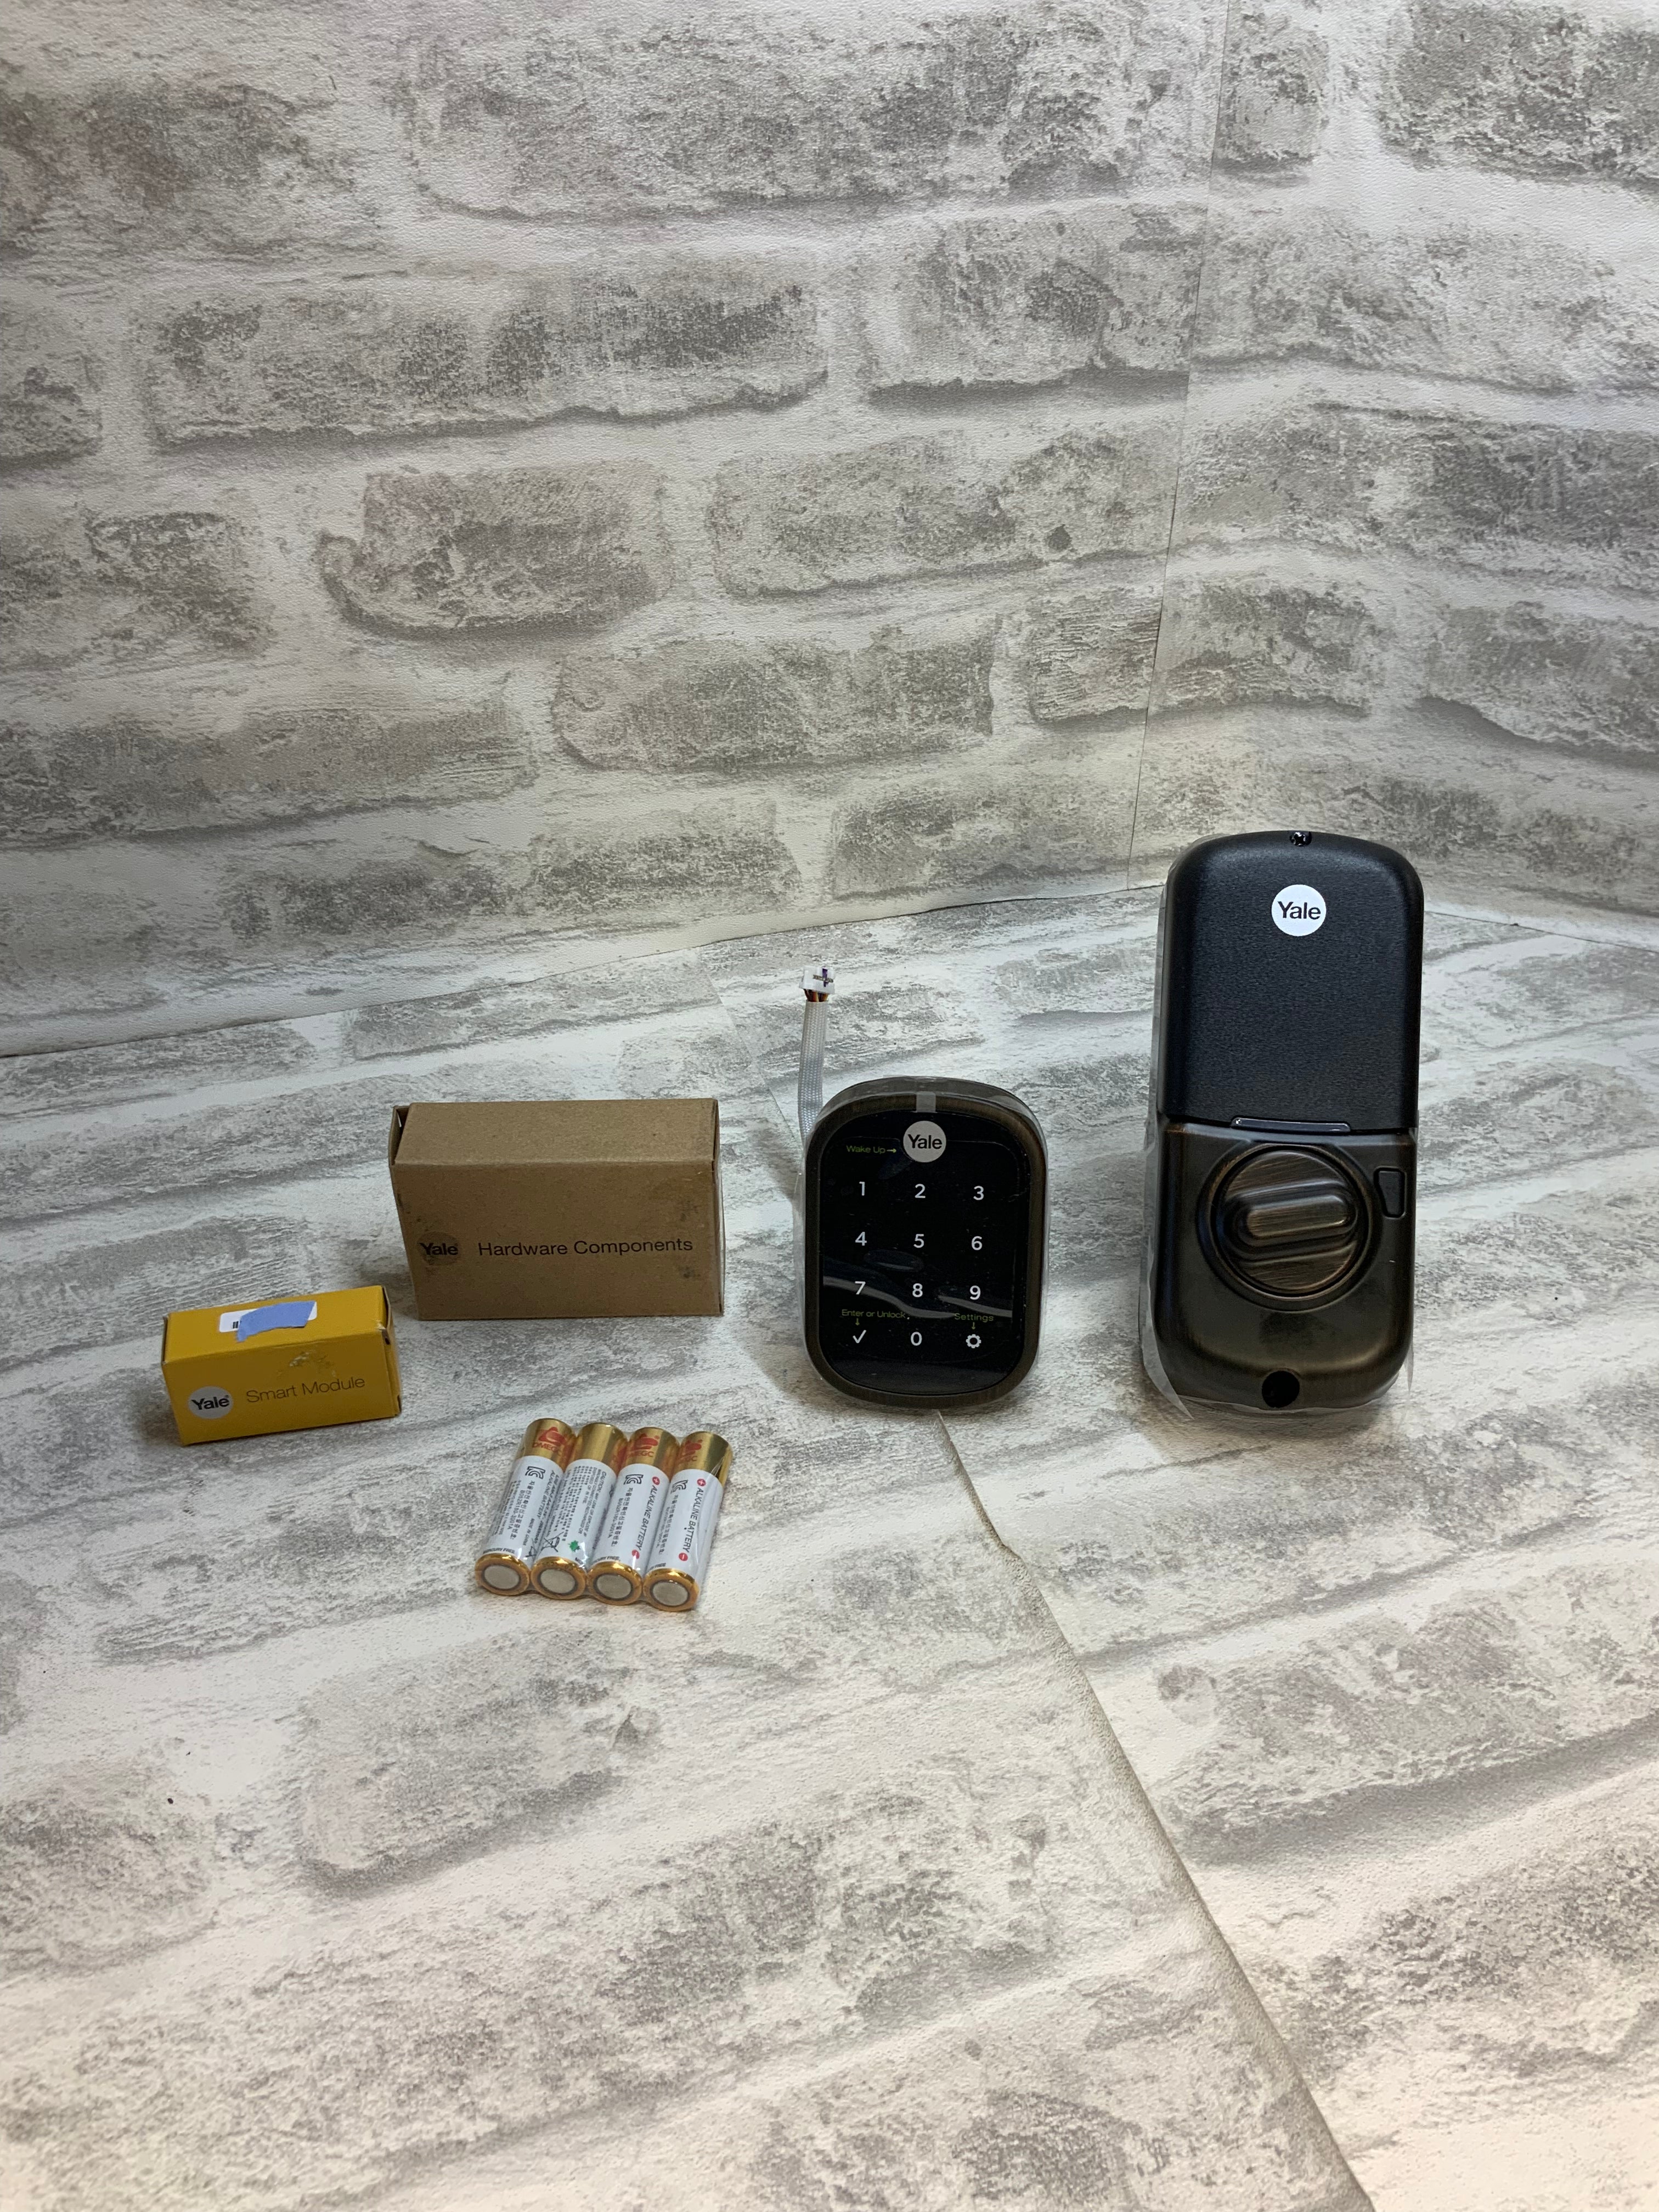 Yale Assure Lock SL with Z-Wave, Key-Free Touchscreen Deadbolt, Lock only (7579858764014)